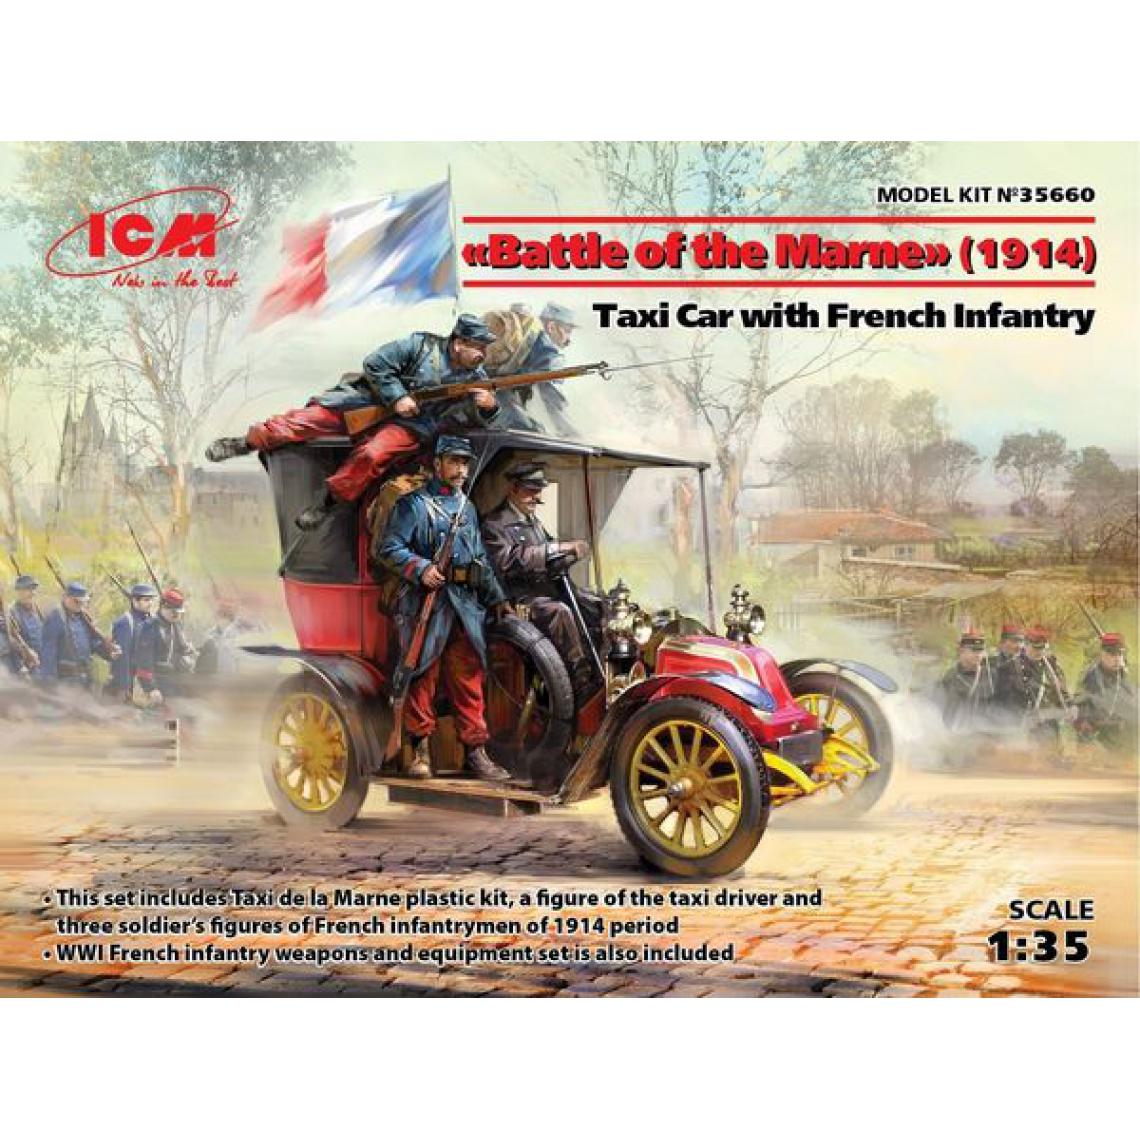 Icm - Battle of the Marne(1914),Taxi car wit French Infantry- 1:35e - ICM - Accessoires et pièces